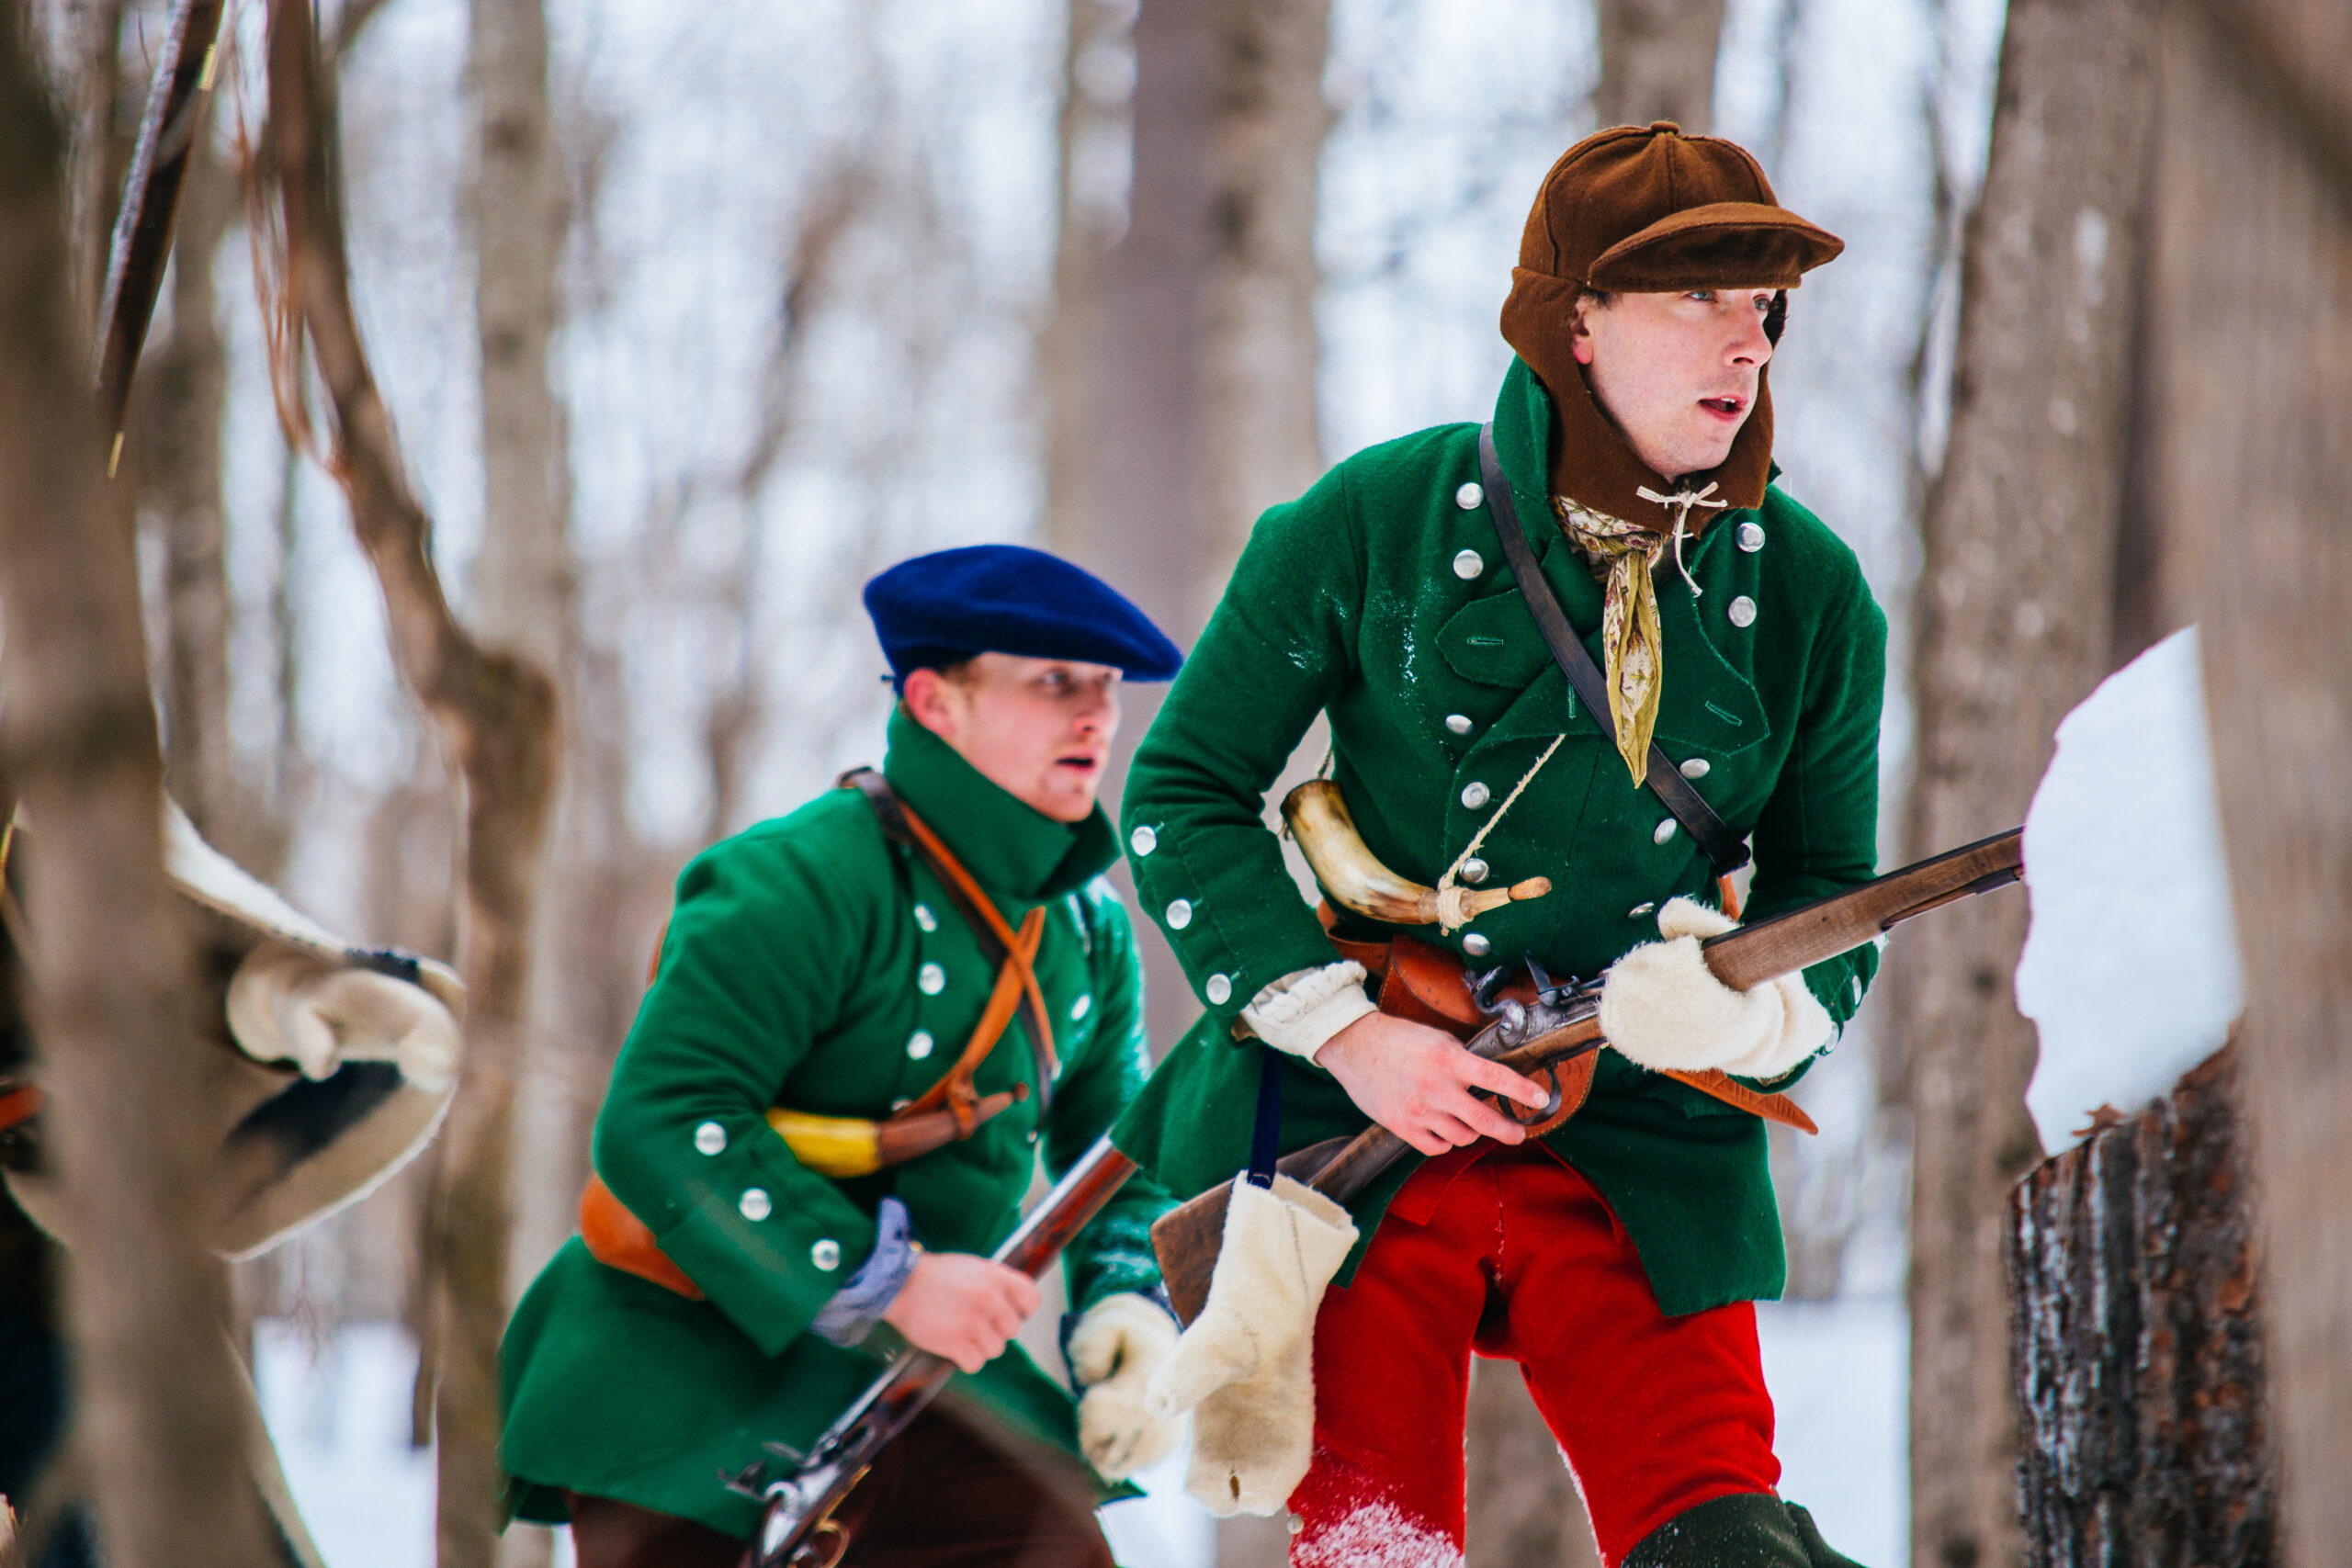 Battle of Carillon Reenactment at Fort Ticonderoga, New York 